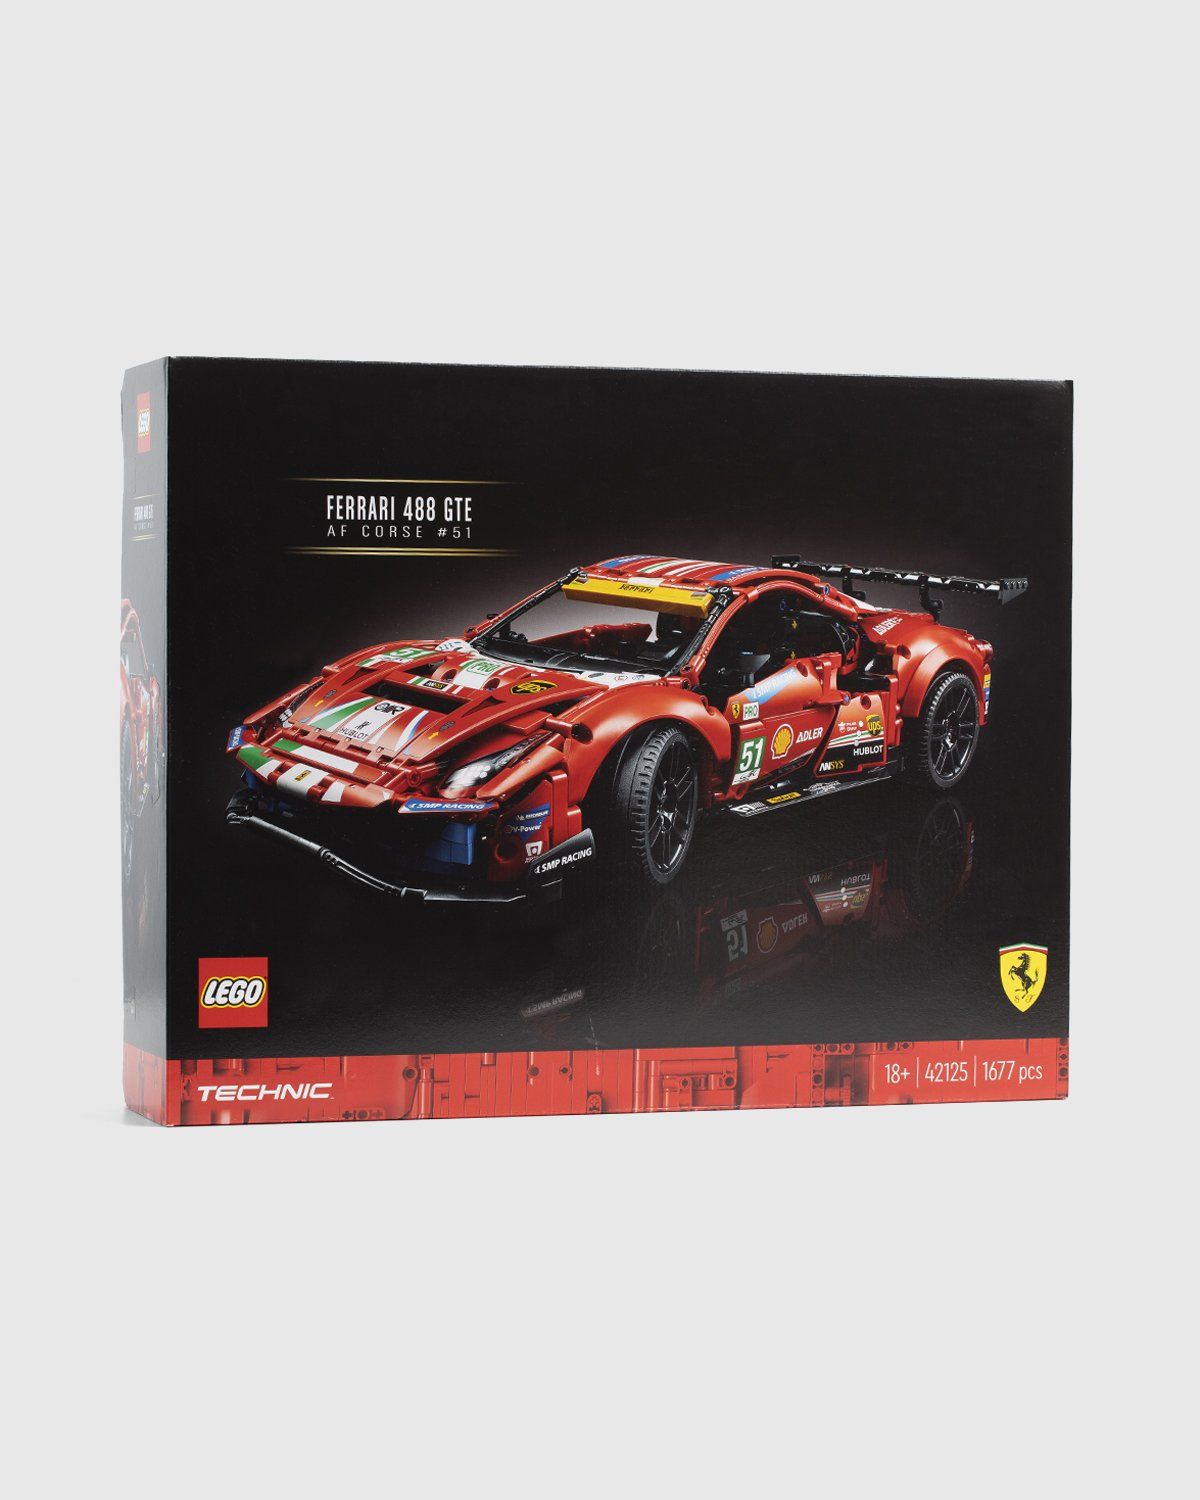 LEGO – Technic Ferrari 488 GTE AF Corse 51 Red - Image 3